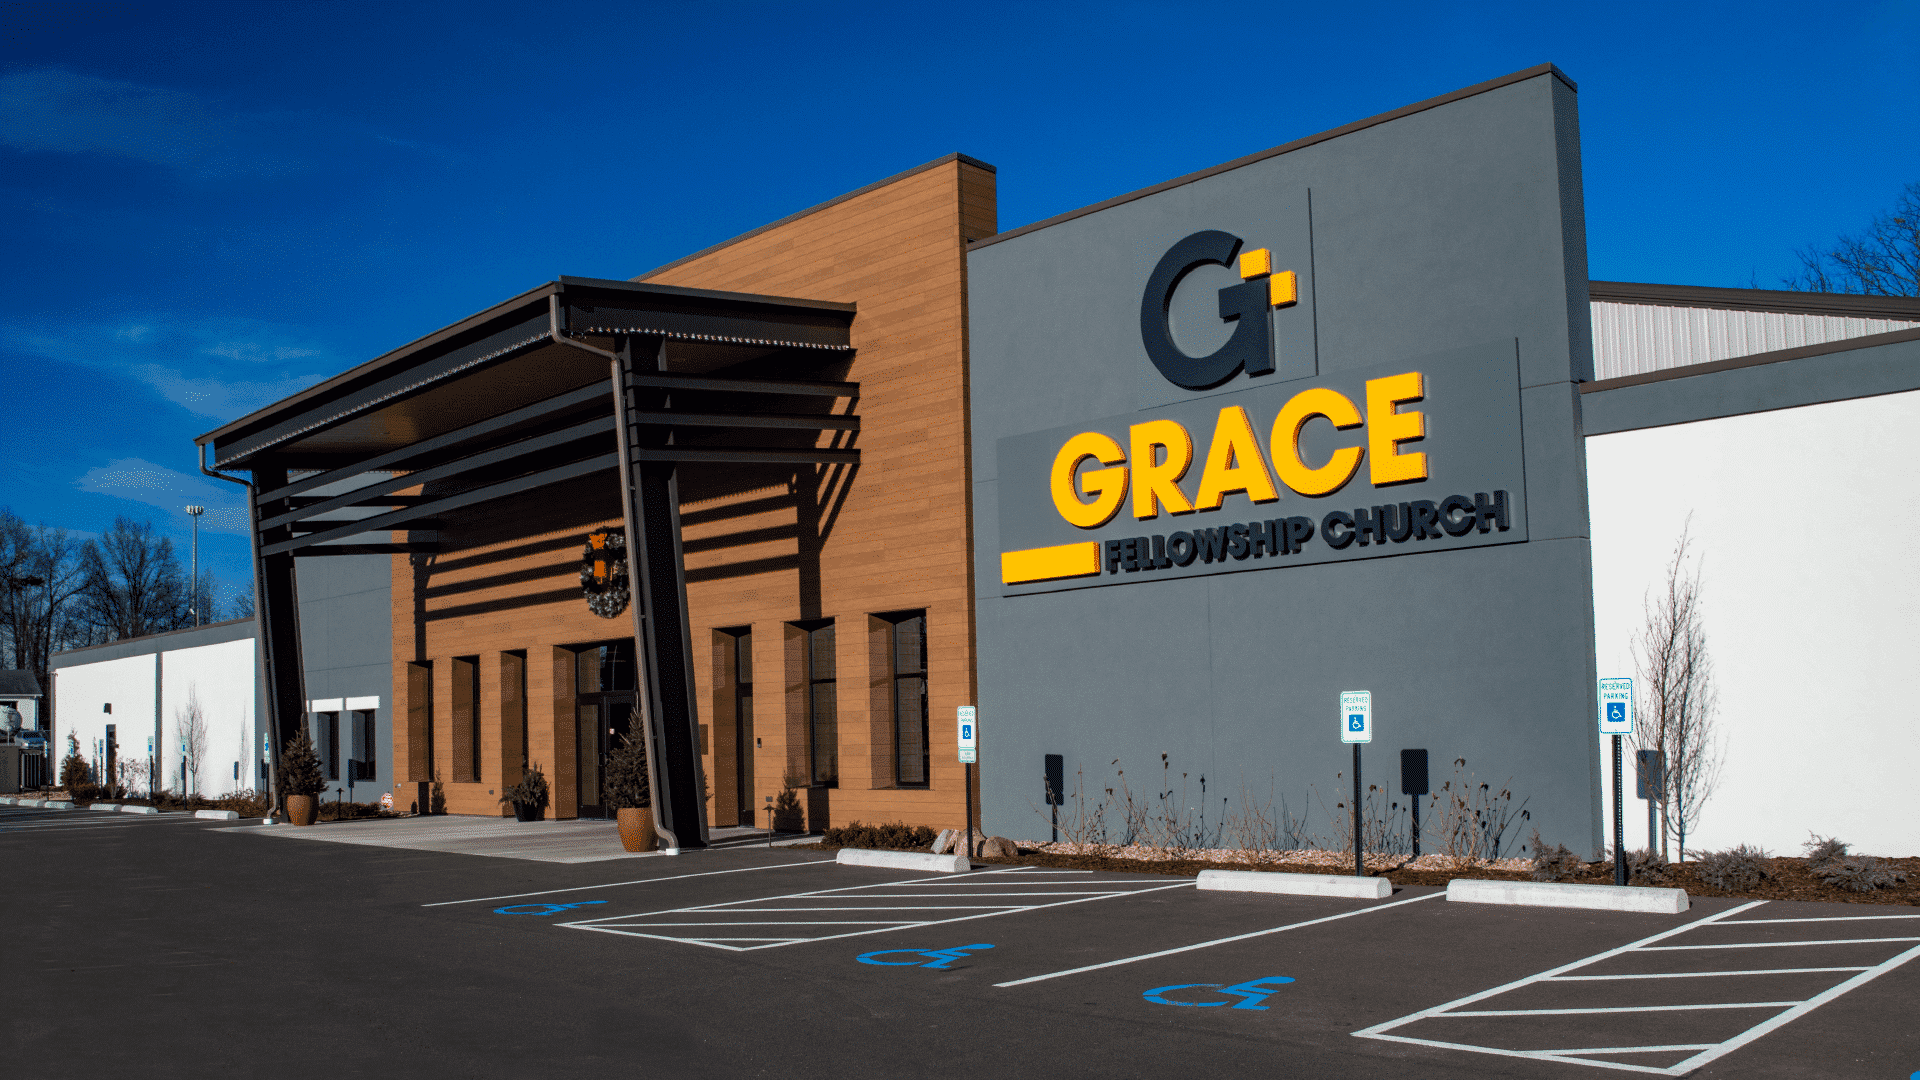 Grace Fellowship Church 